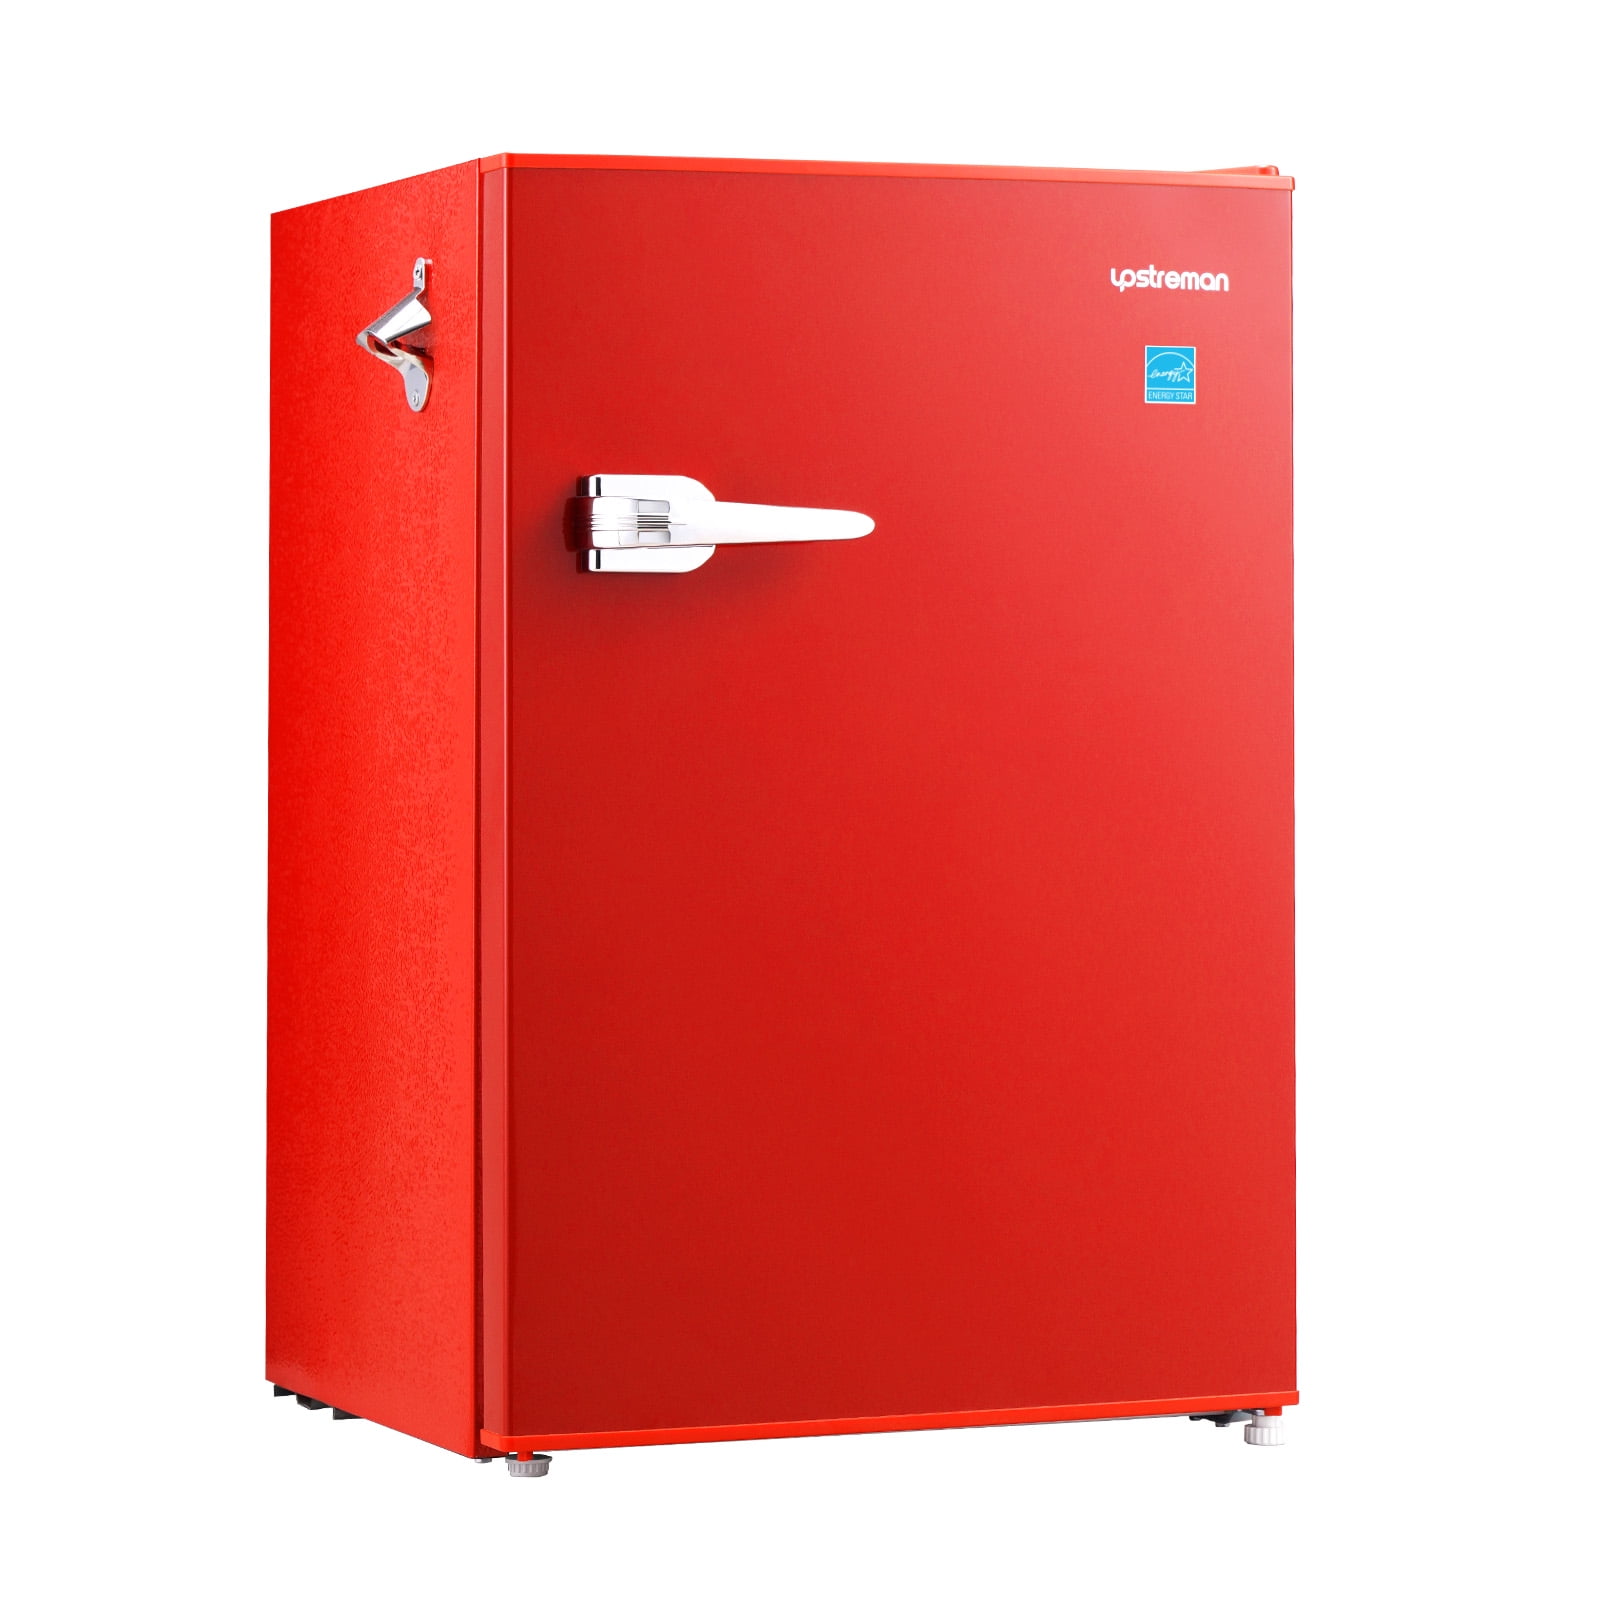 Upstreman 4.5 Cu Ft Retro Compact Refrigerator, Mini Fridge with